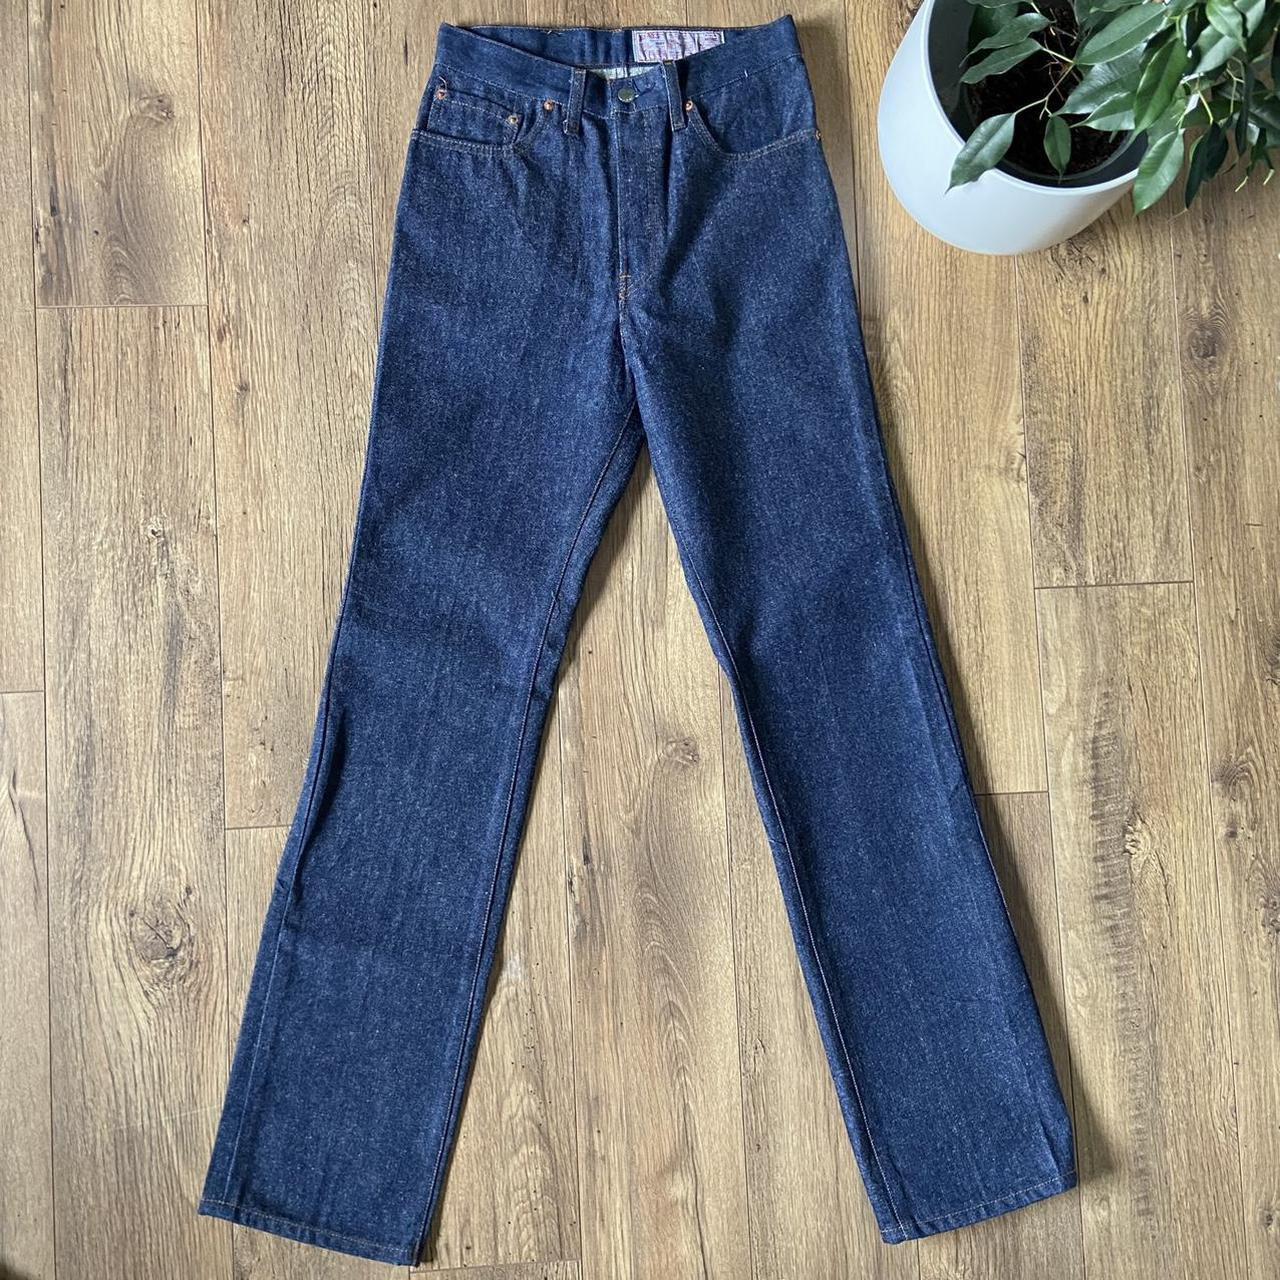 Navy Levi’s jeans 29x36